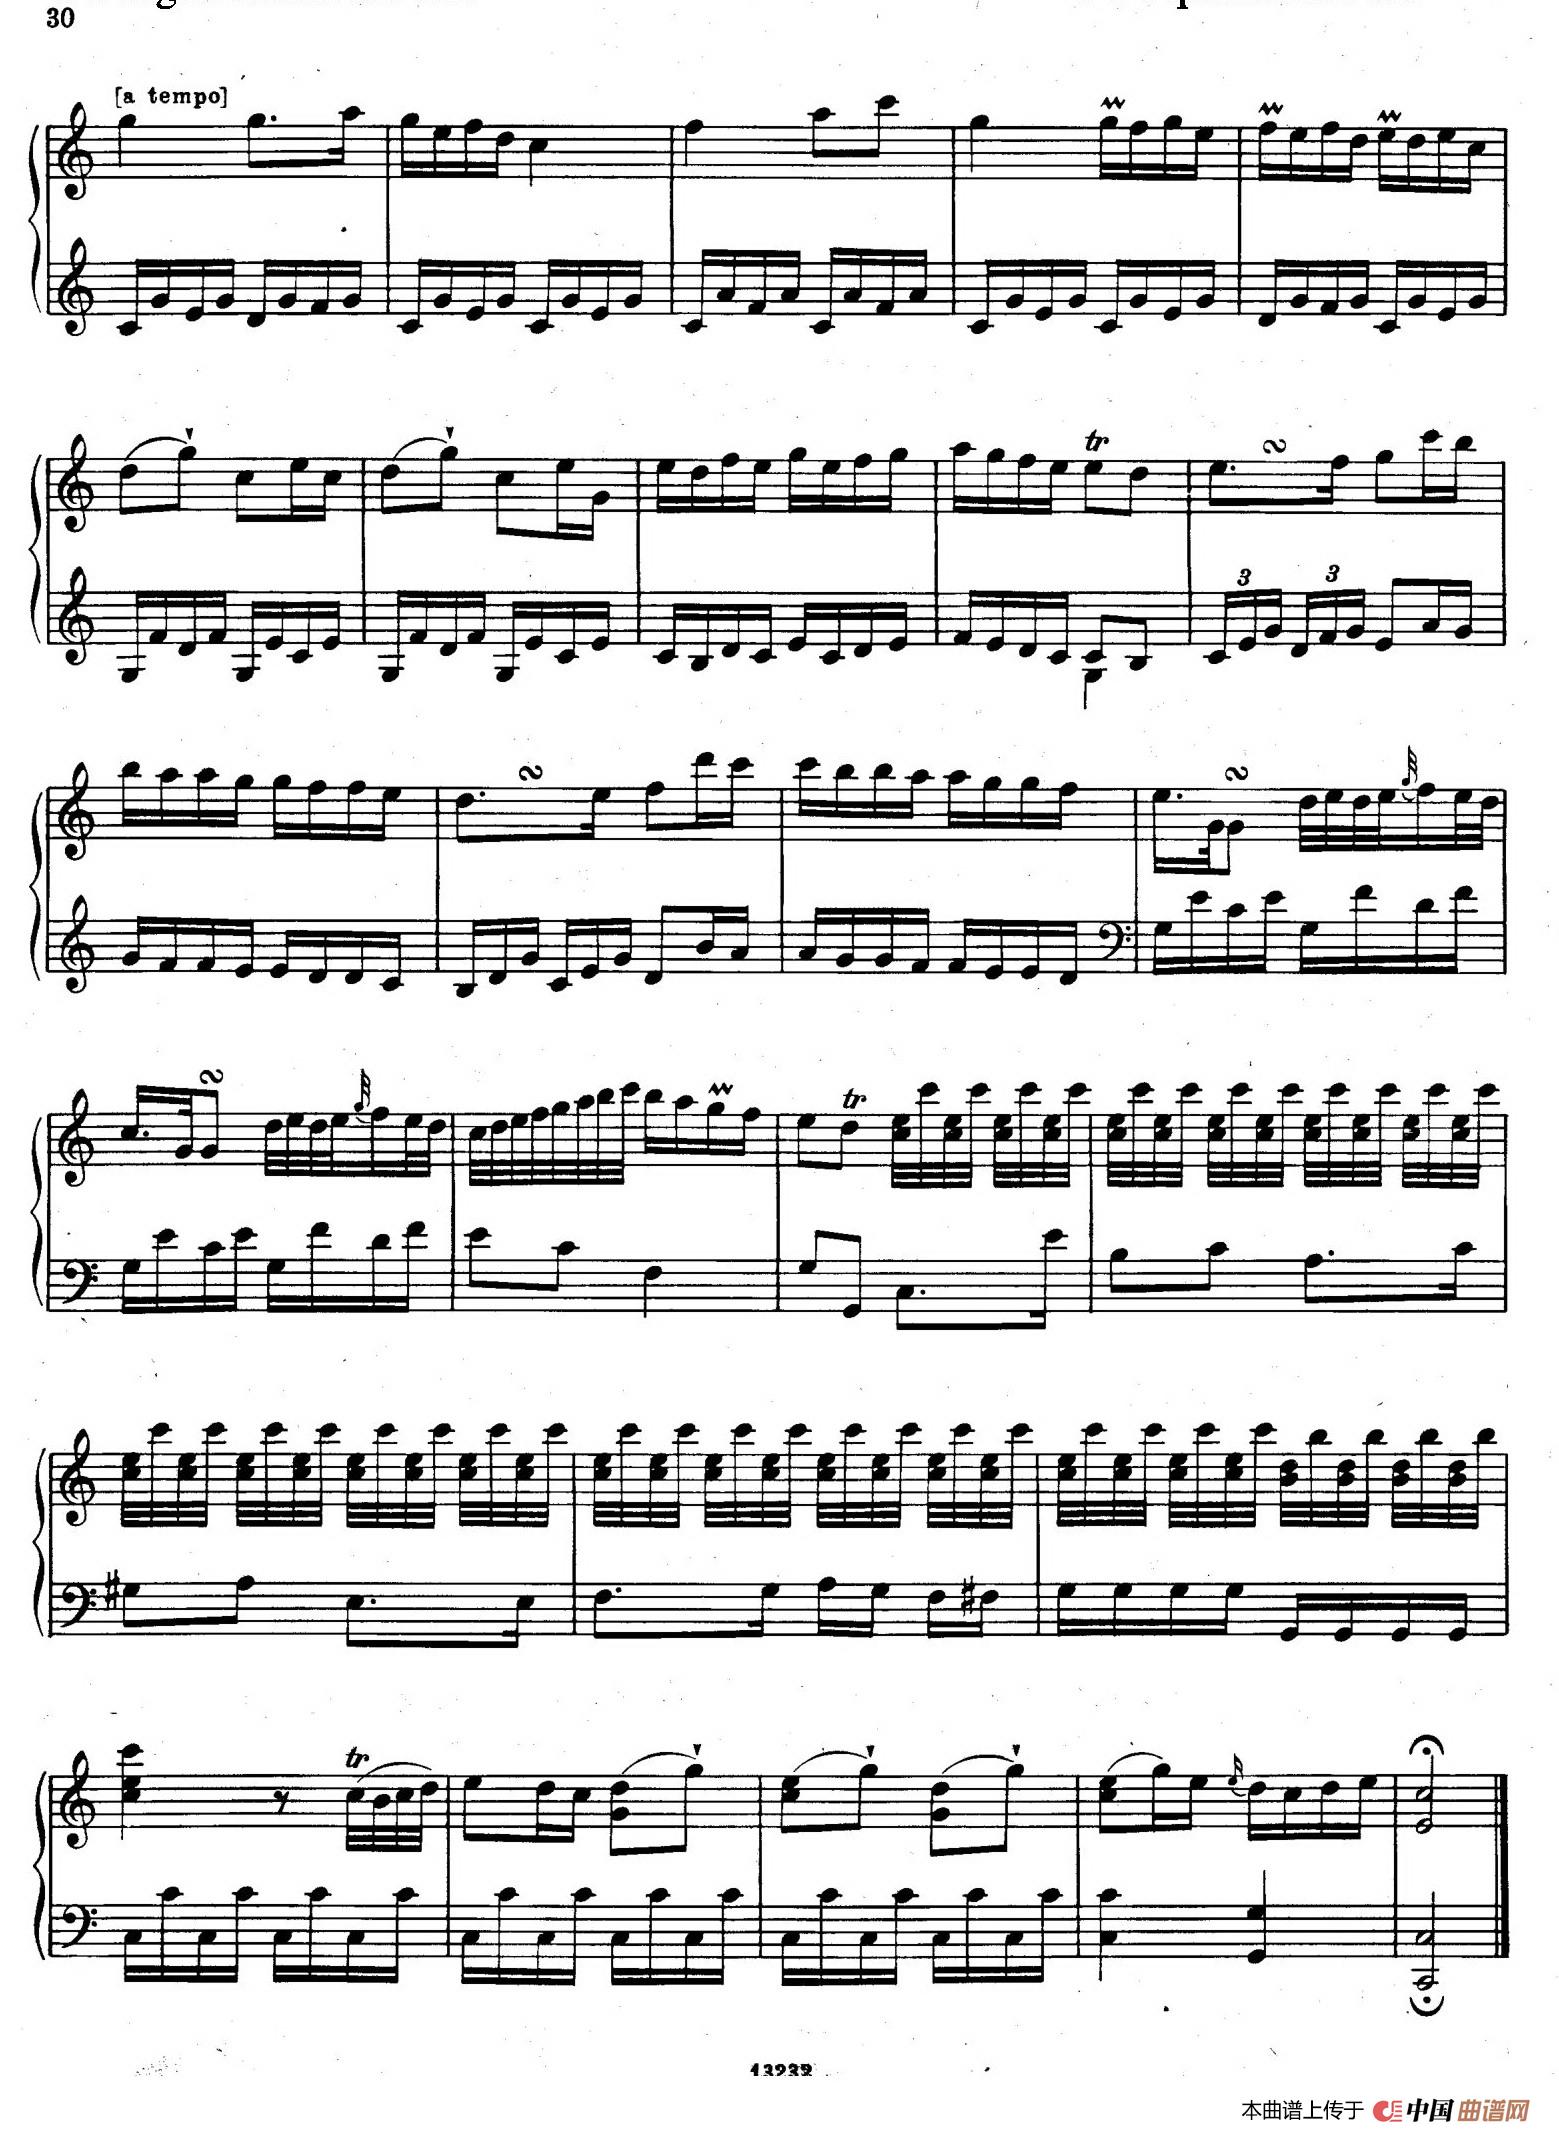 《Rondo in C Major》钢琴曲谱图分享